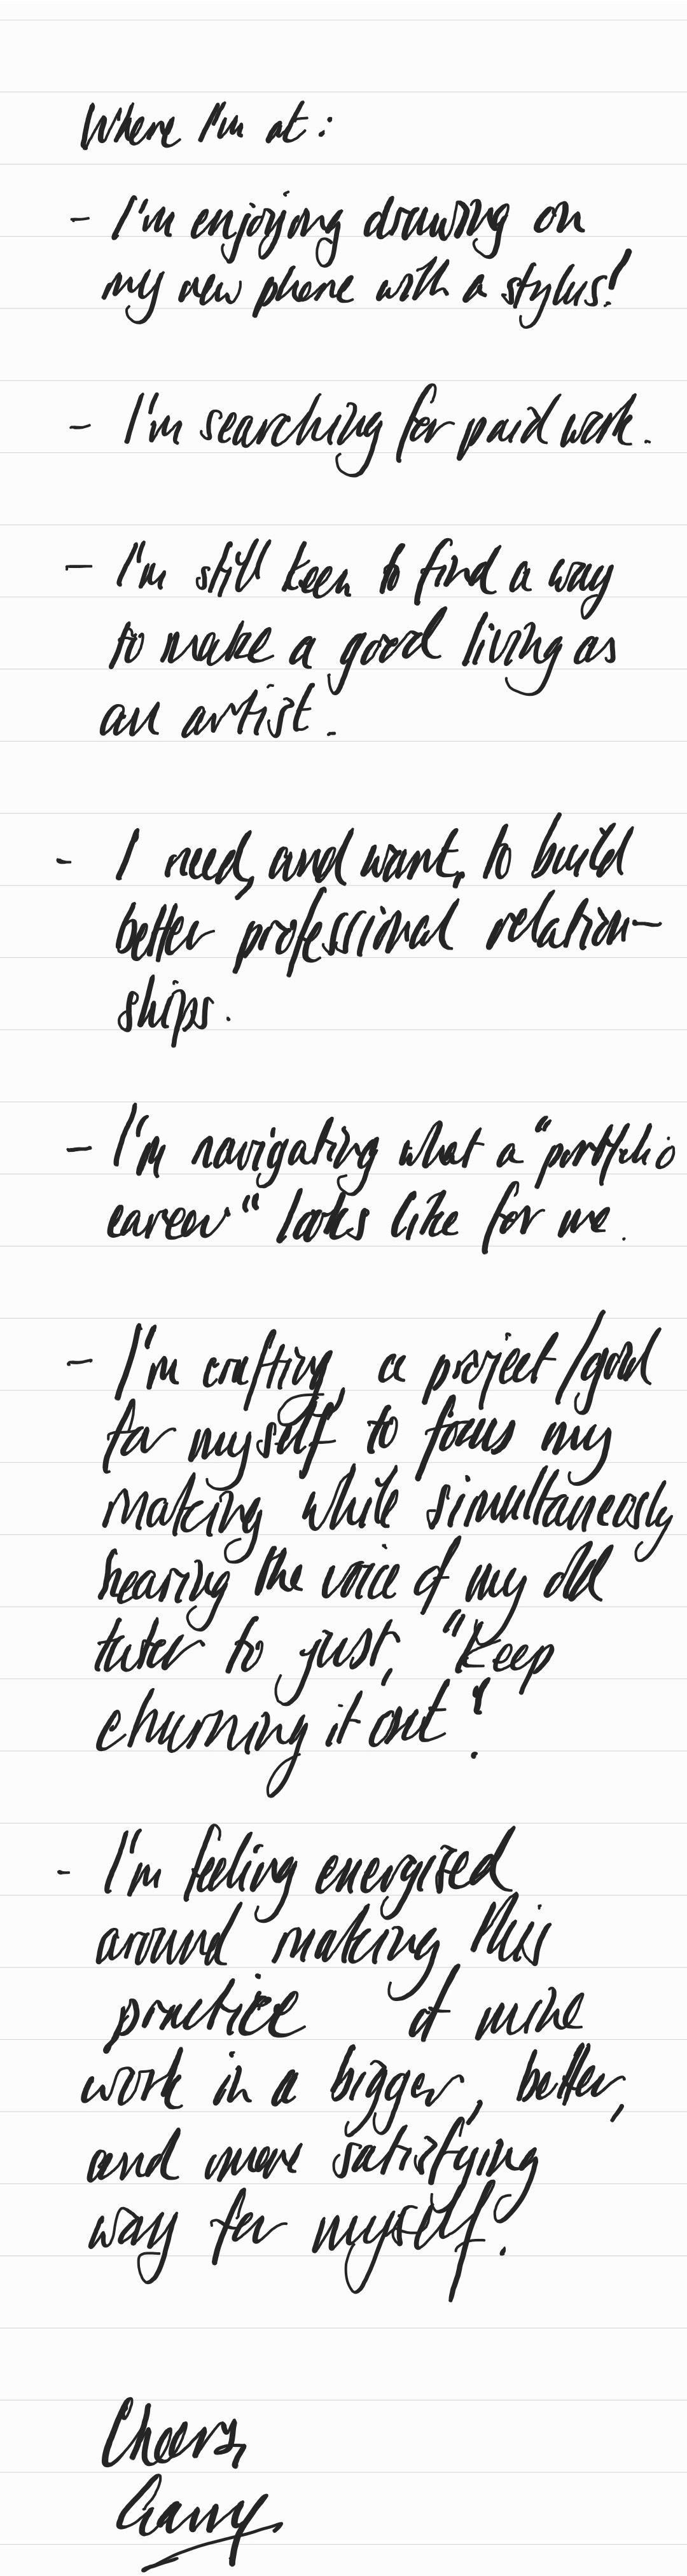 Handwritten notes. I'm enjoying drawing using the stylus on my new phone. 